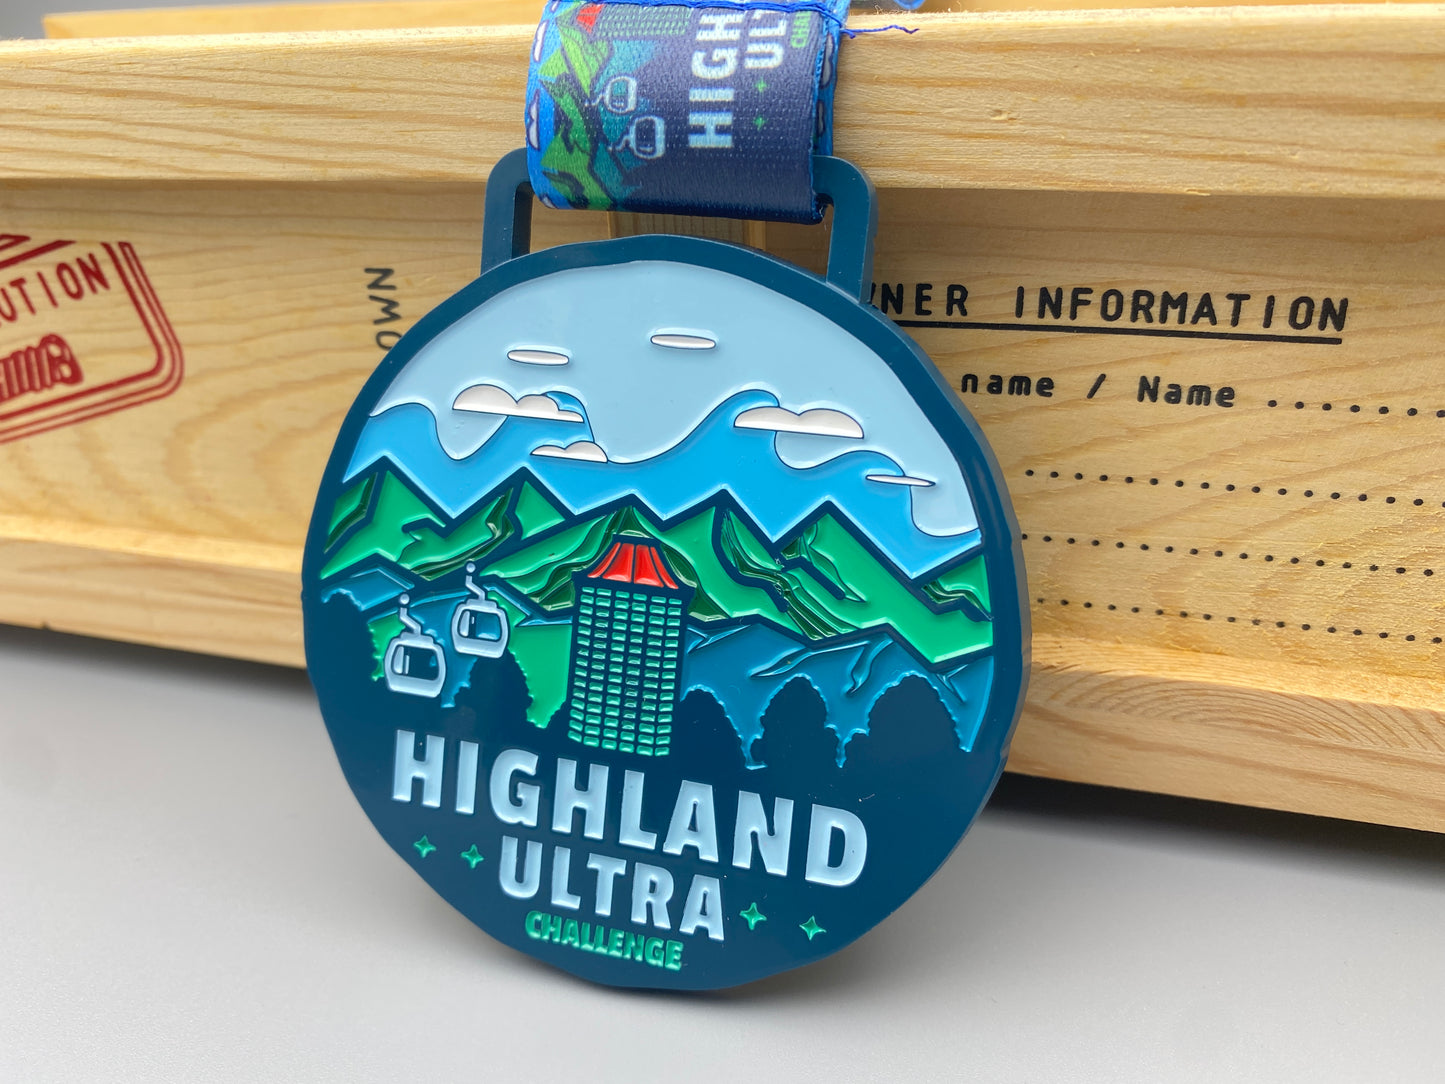 Highland Ultra Challenge 2020